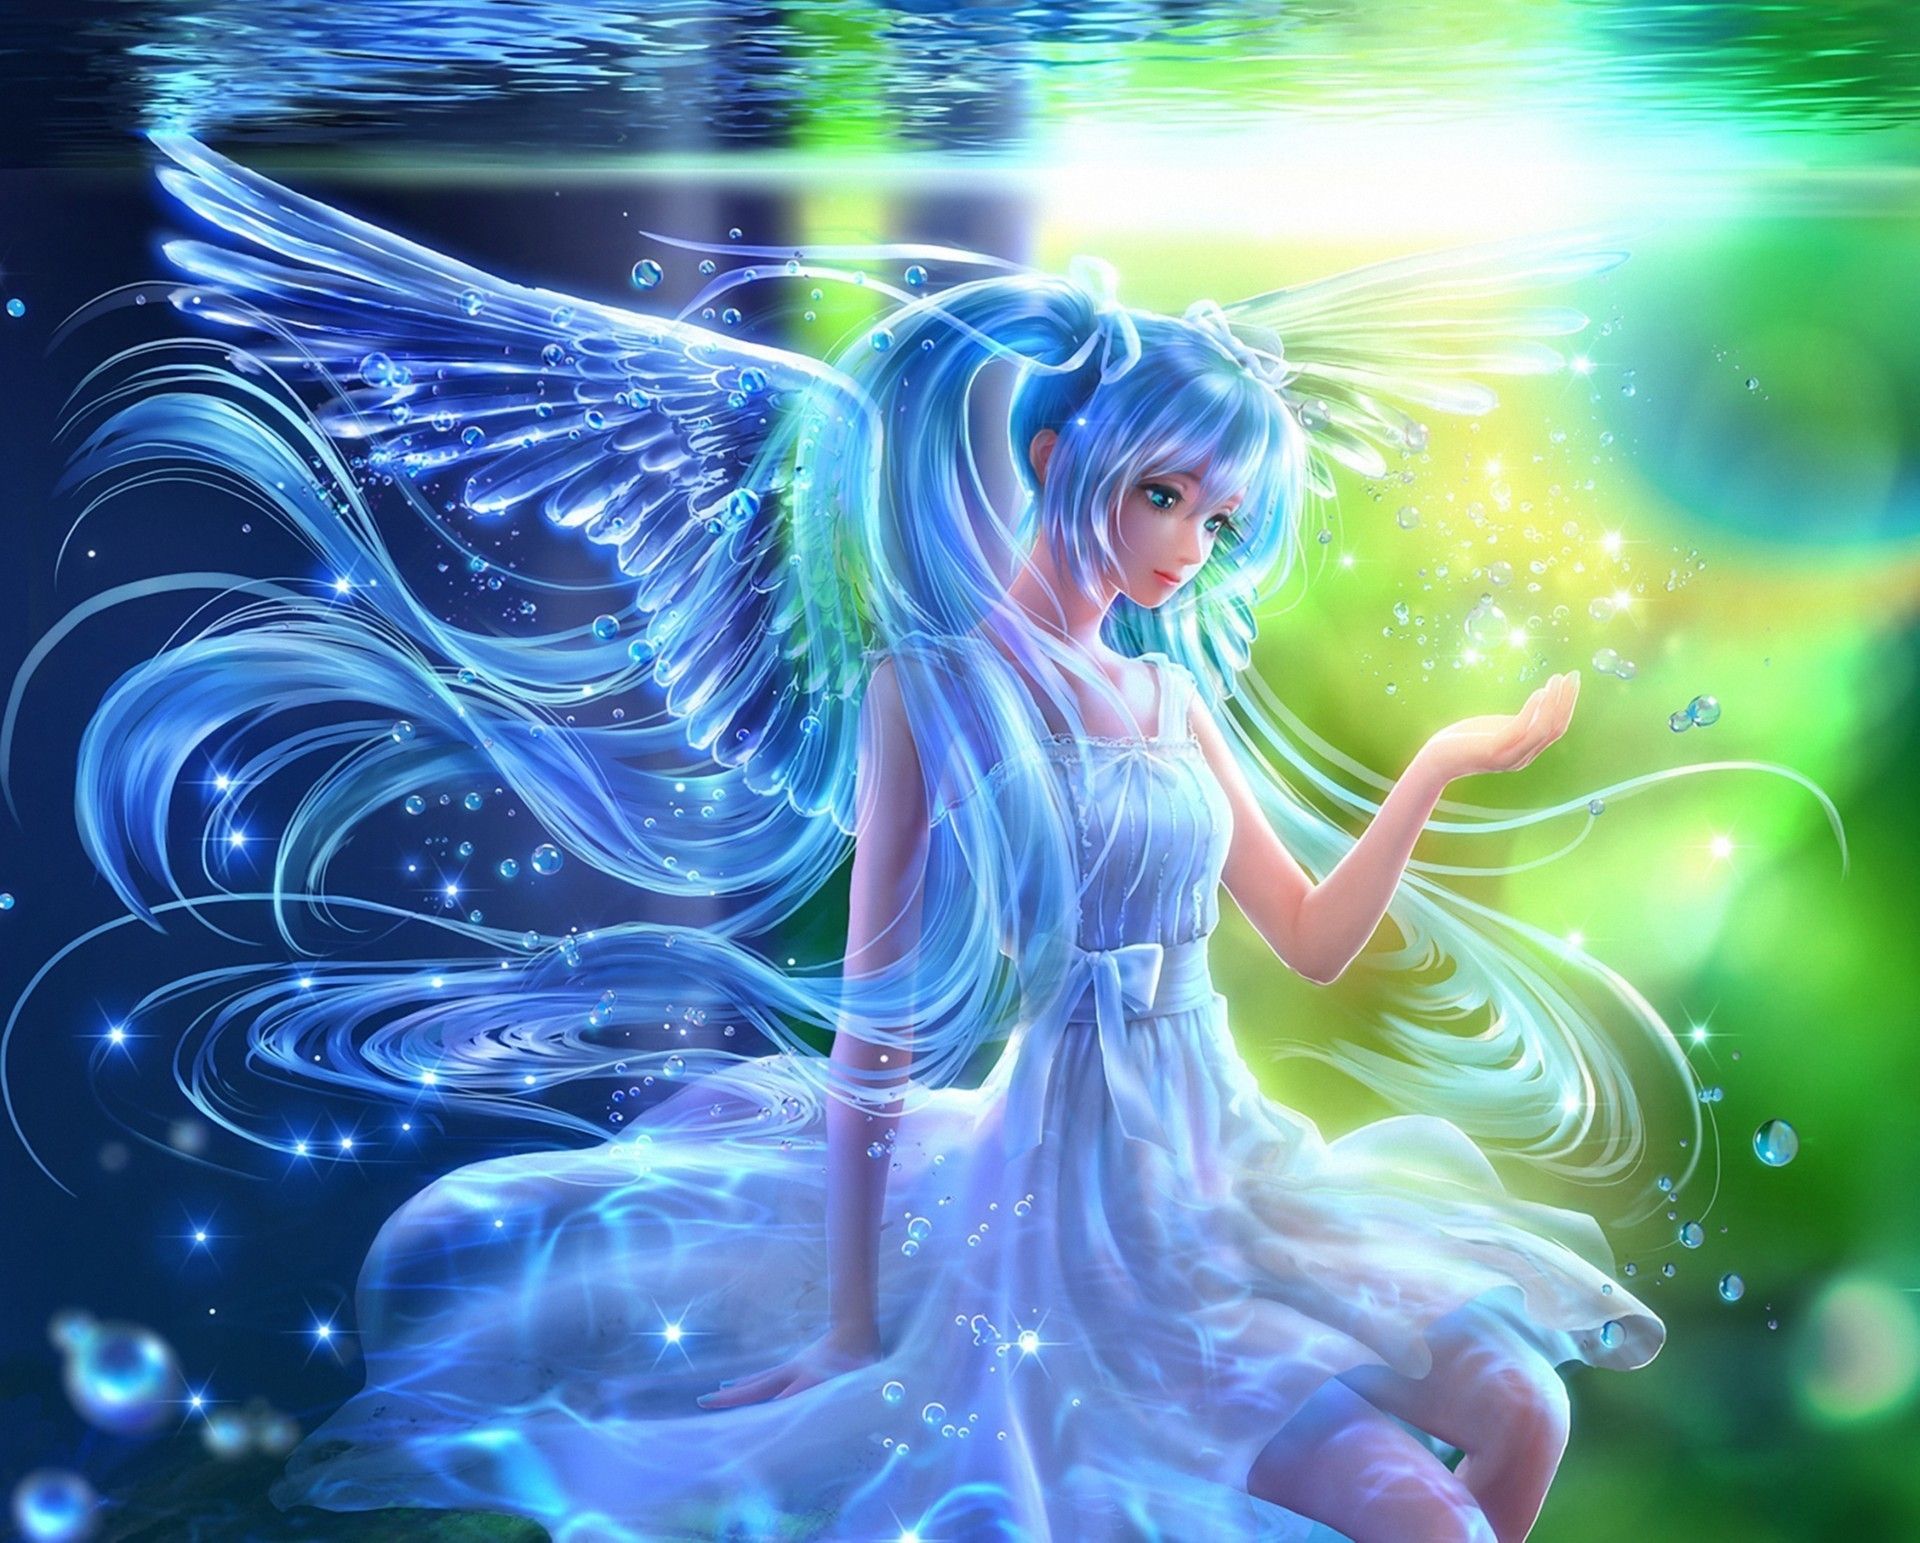 Beautiful Anime Angel Girl Wallpaper .goddessofarts.blogspot.com